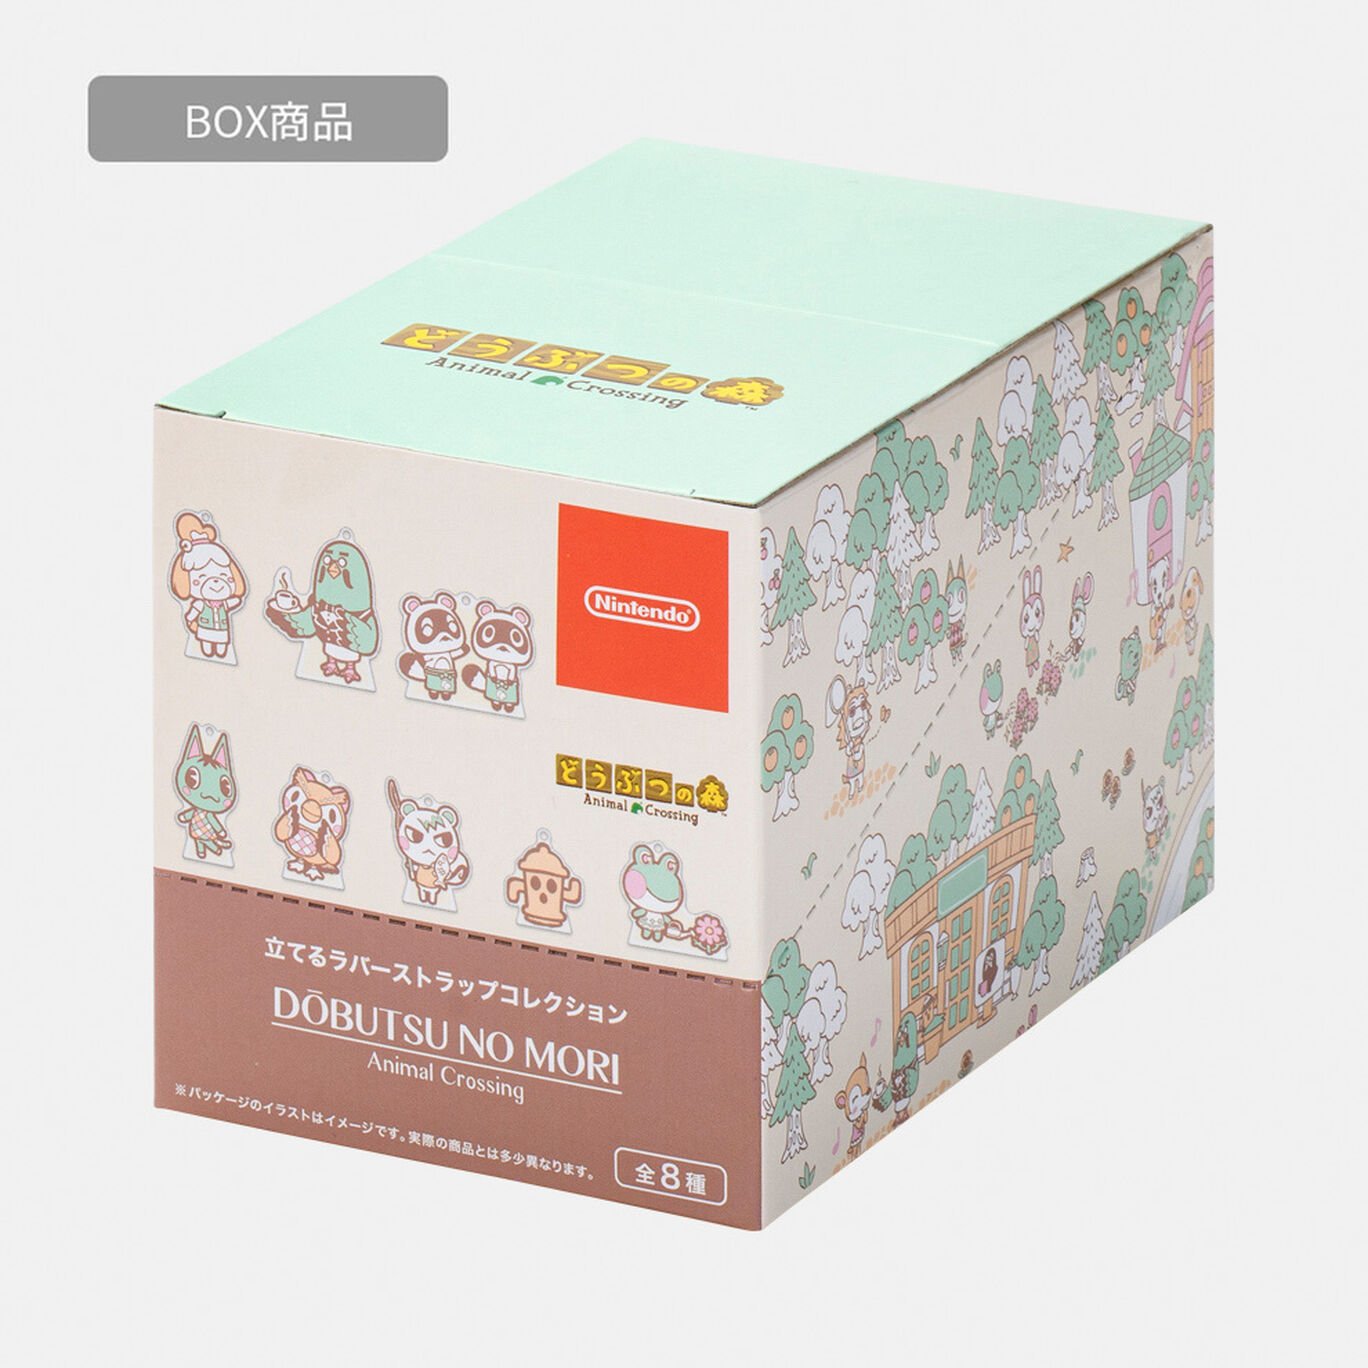 【BOX商品】立てるラバーストラップコレクション どうぶつの森【Nintendo TOKYO取り扱い商品】